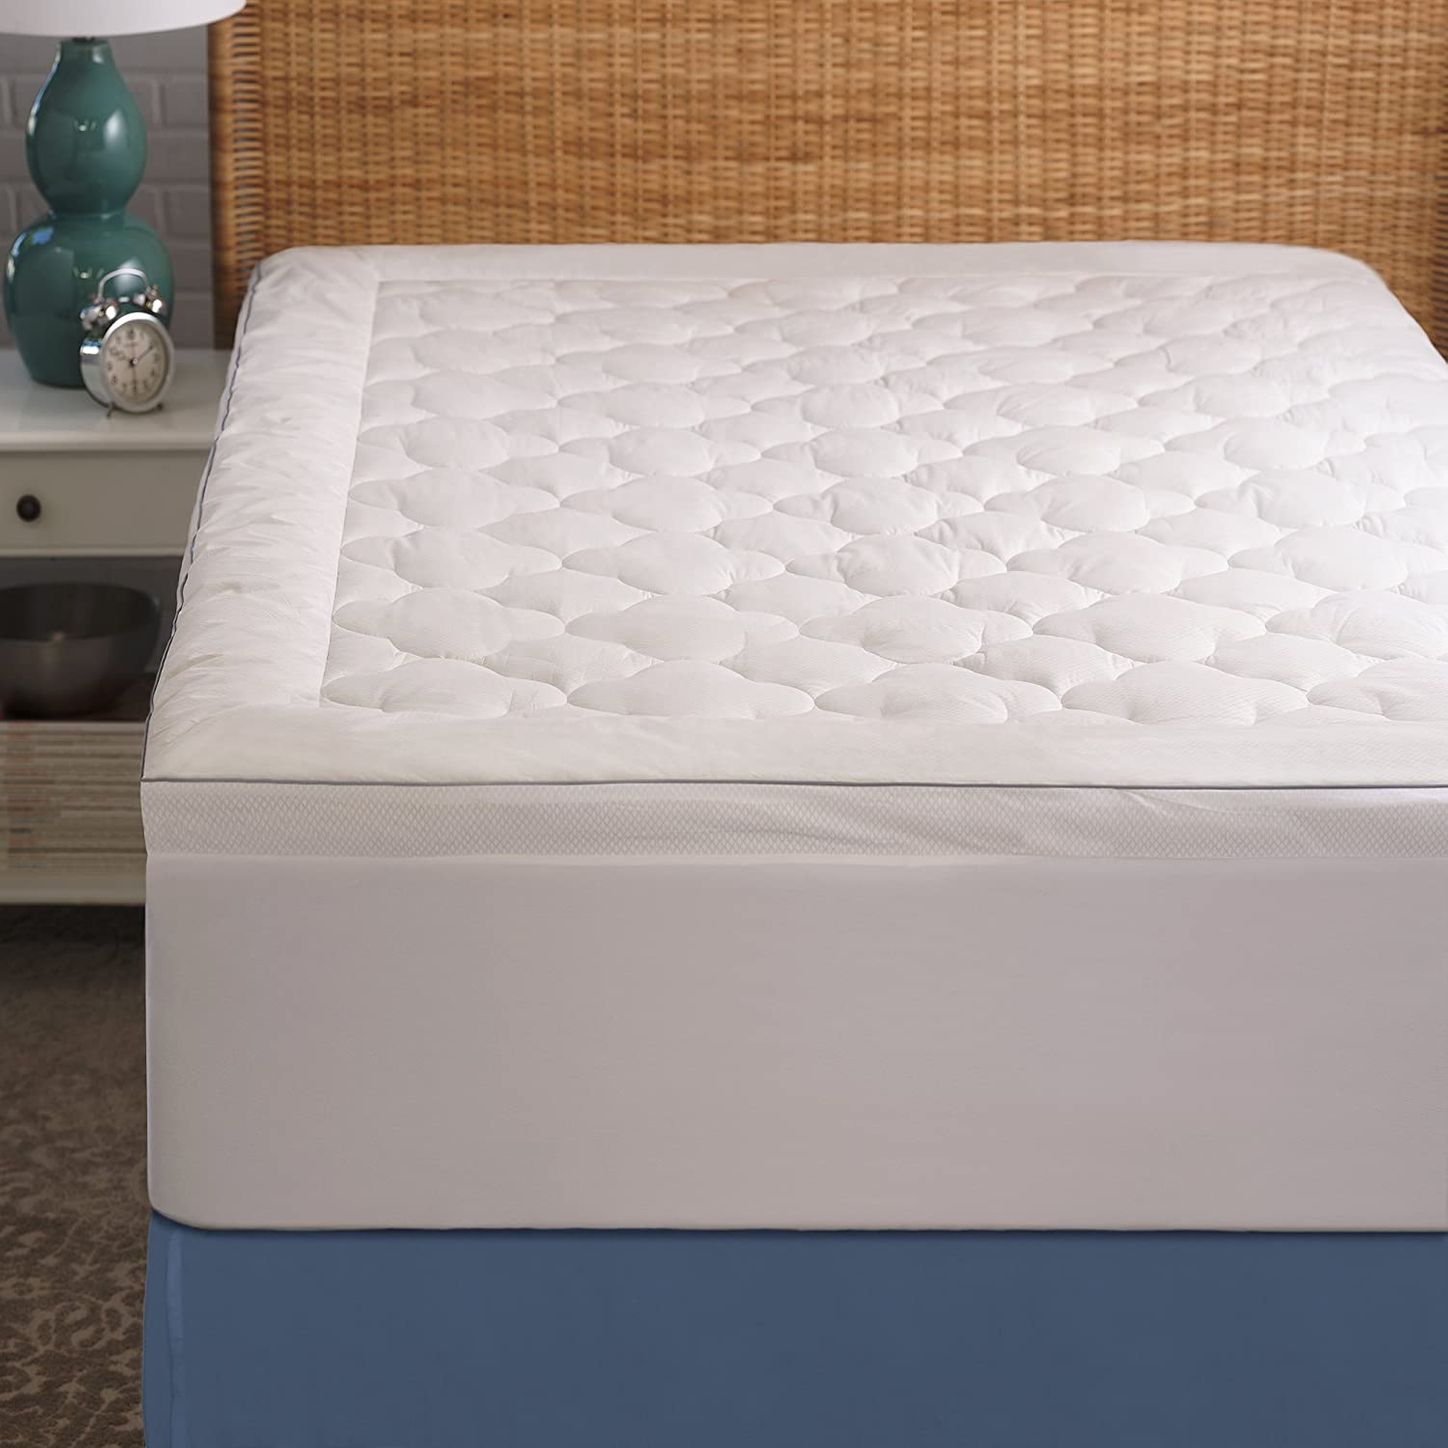 cheapest cooling mattress pad